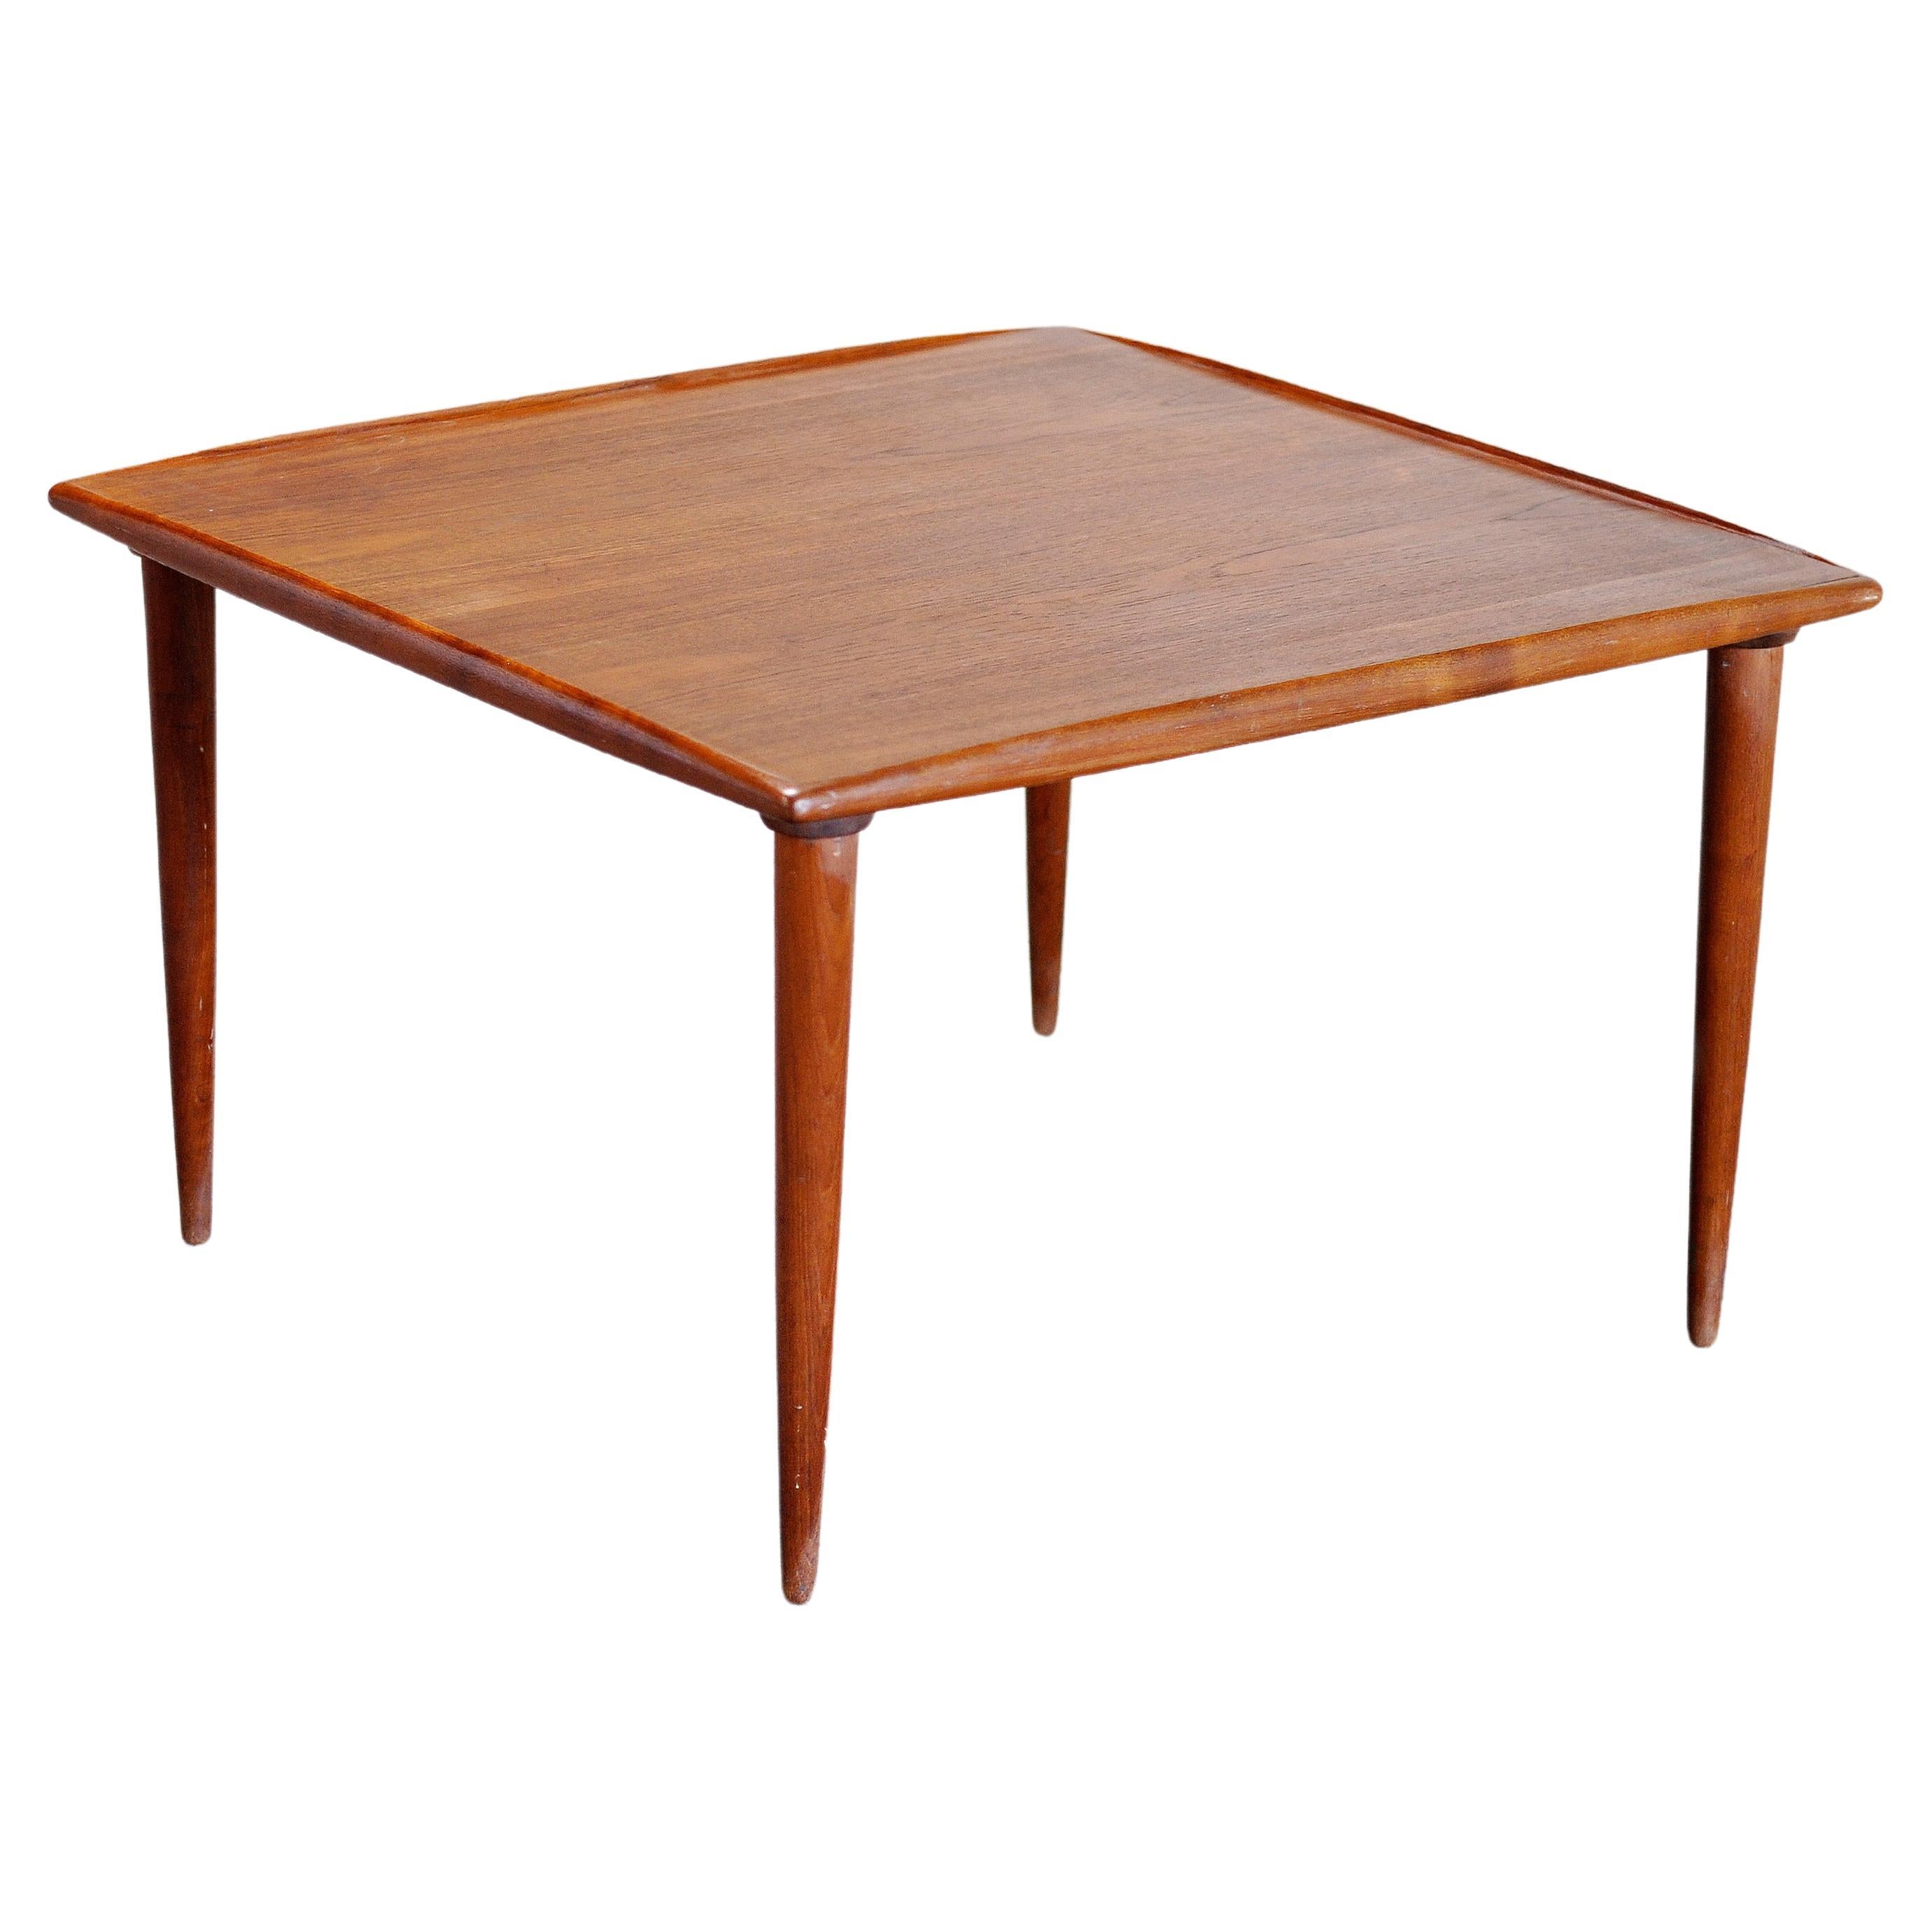 Mid century Danish modern coffee table attributed to Finn Juhl, 1960's